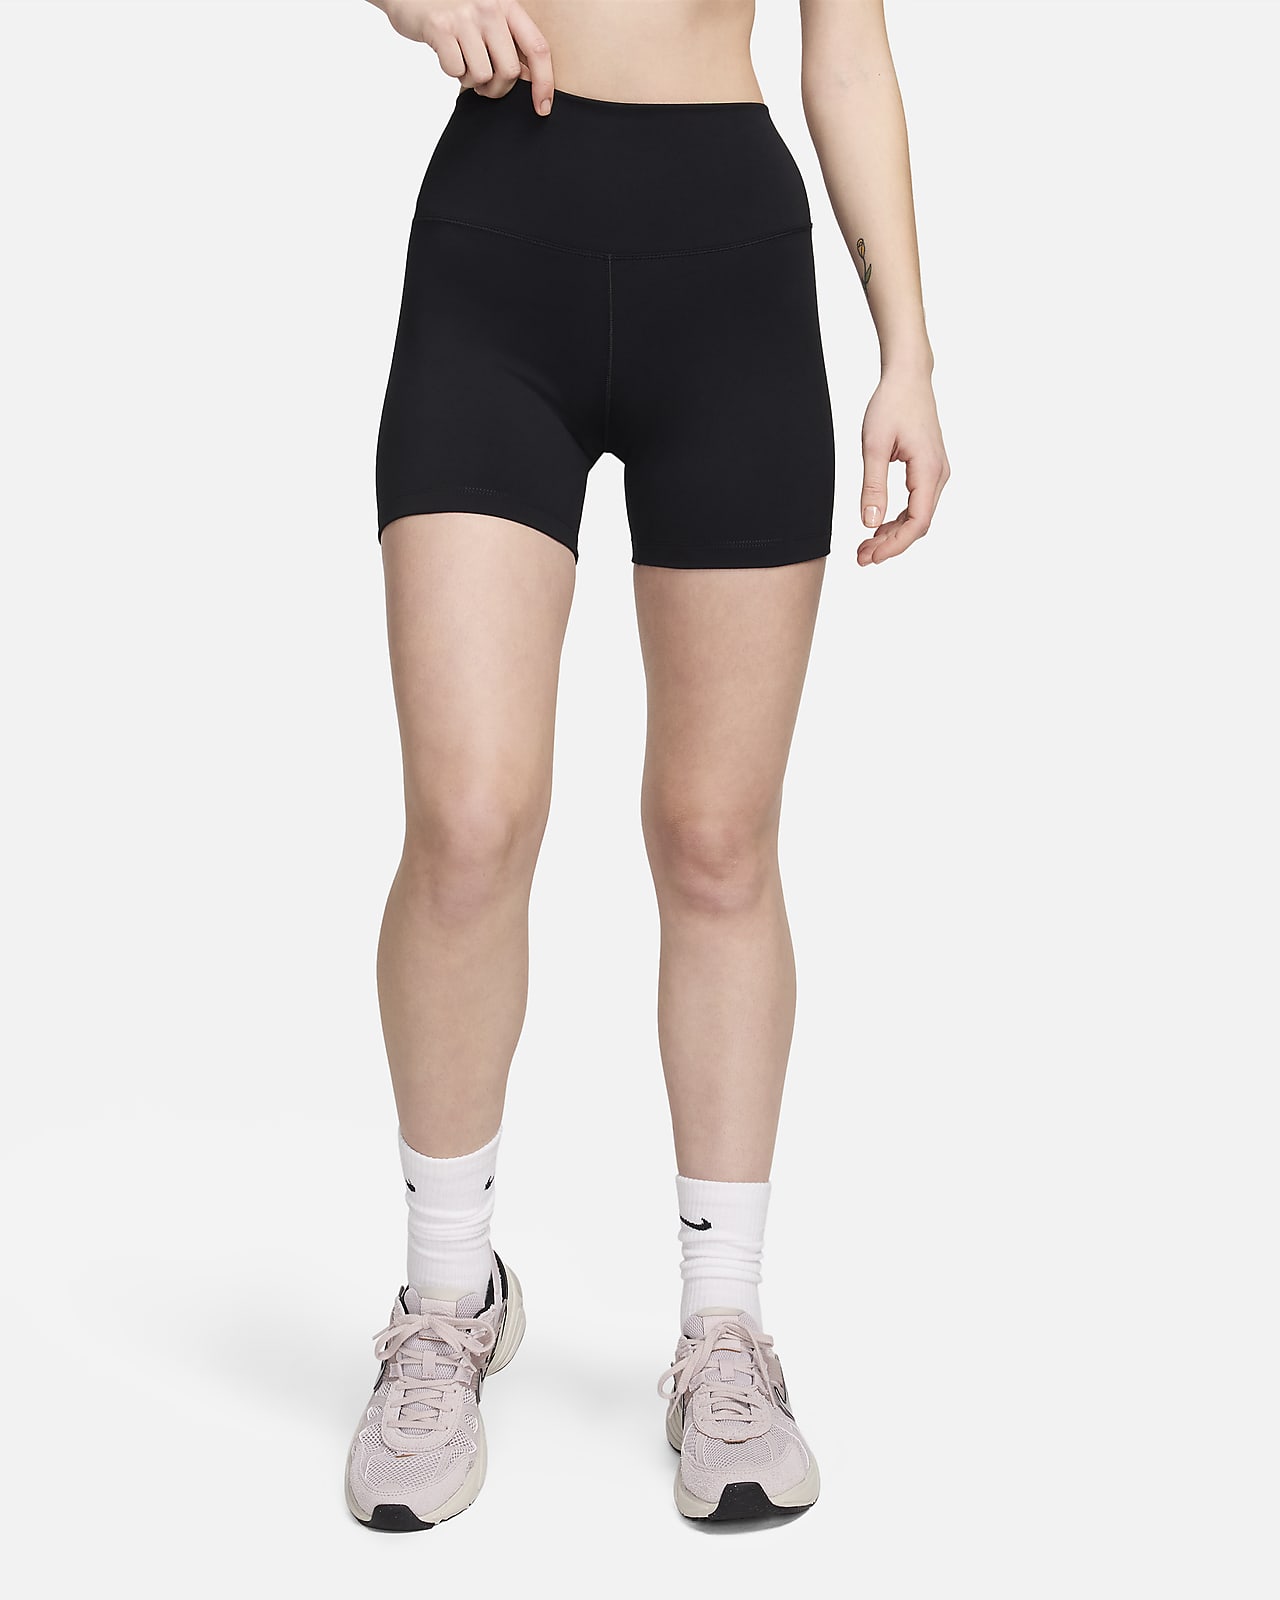 Cycliste taille haute 13 cm Nike One pour femme